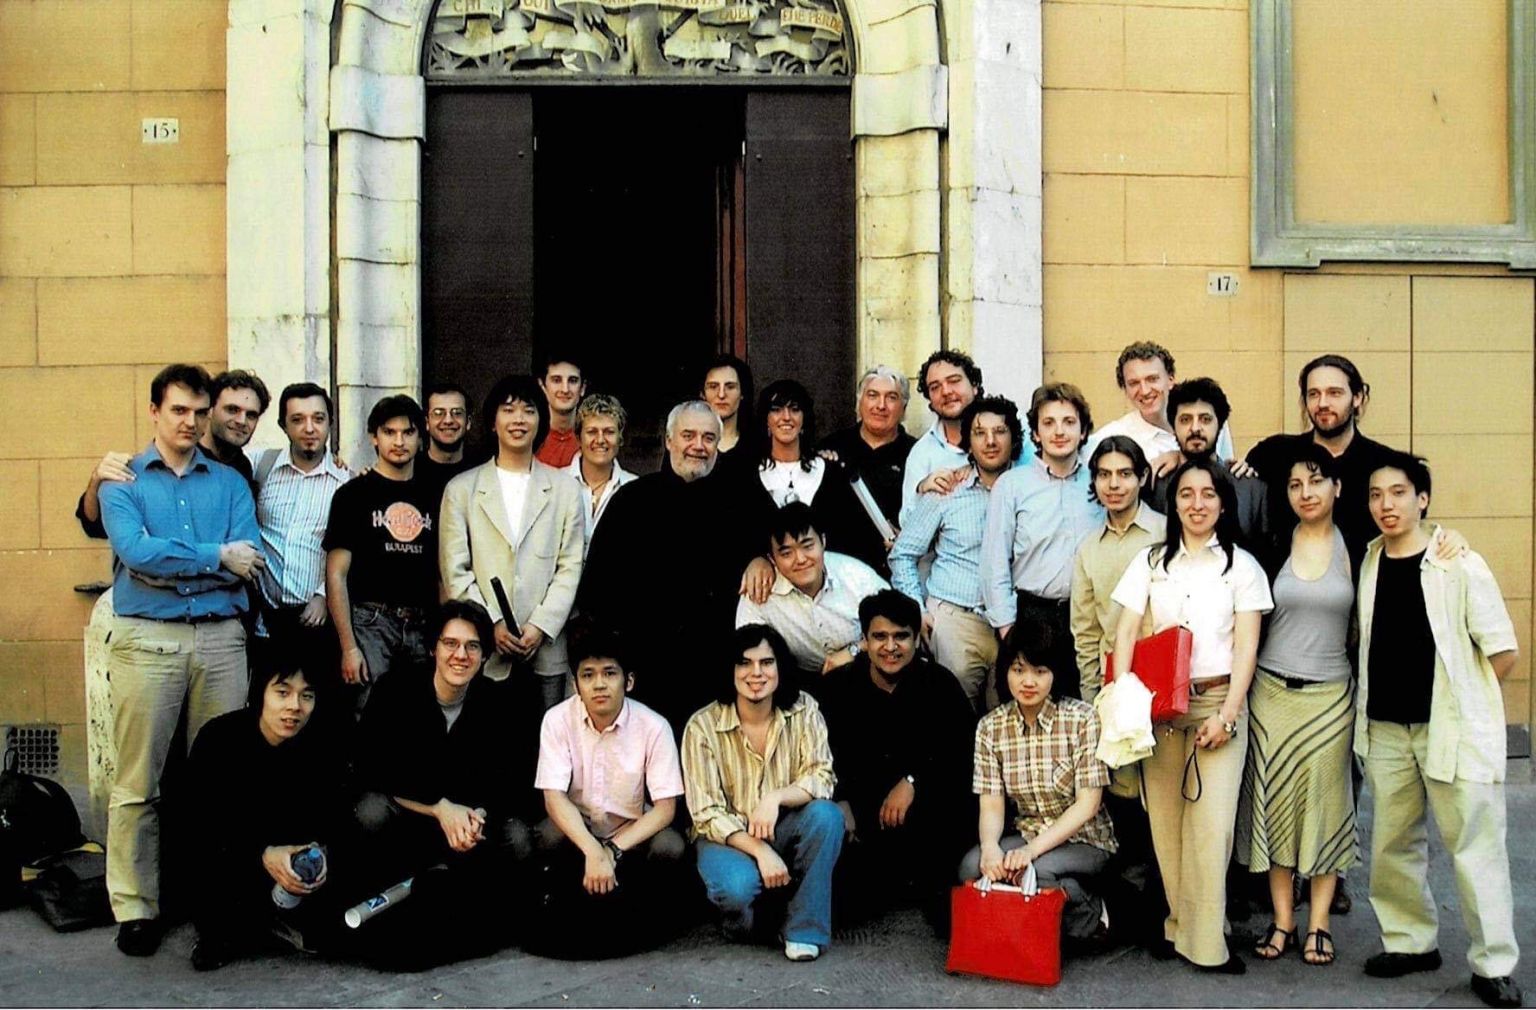 The students at Gianluigi Gelmetti's Accademia Musicale Chigiana